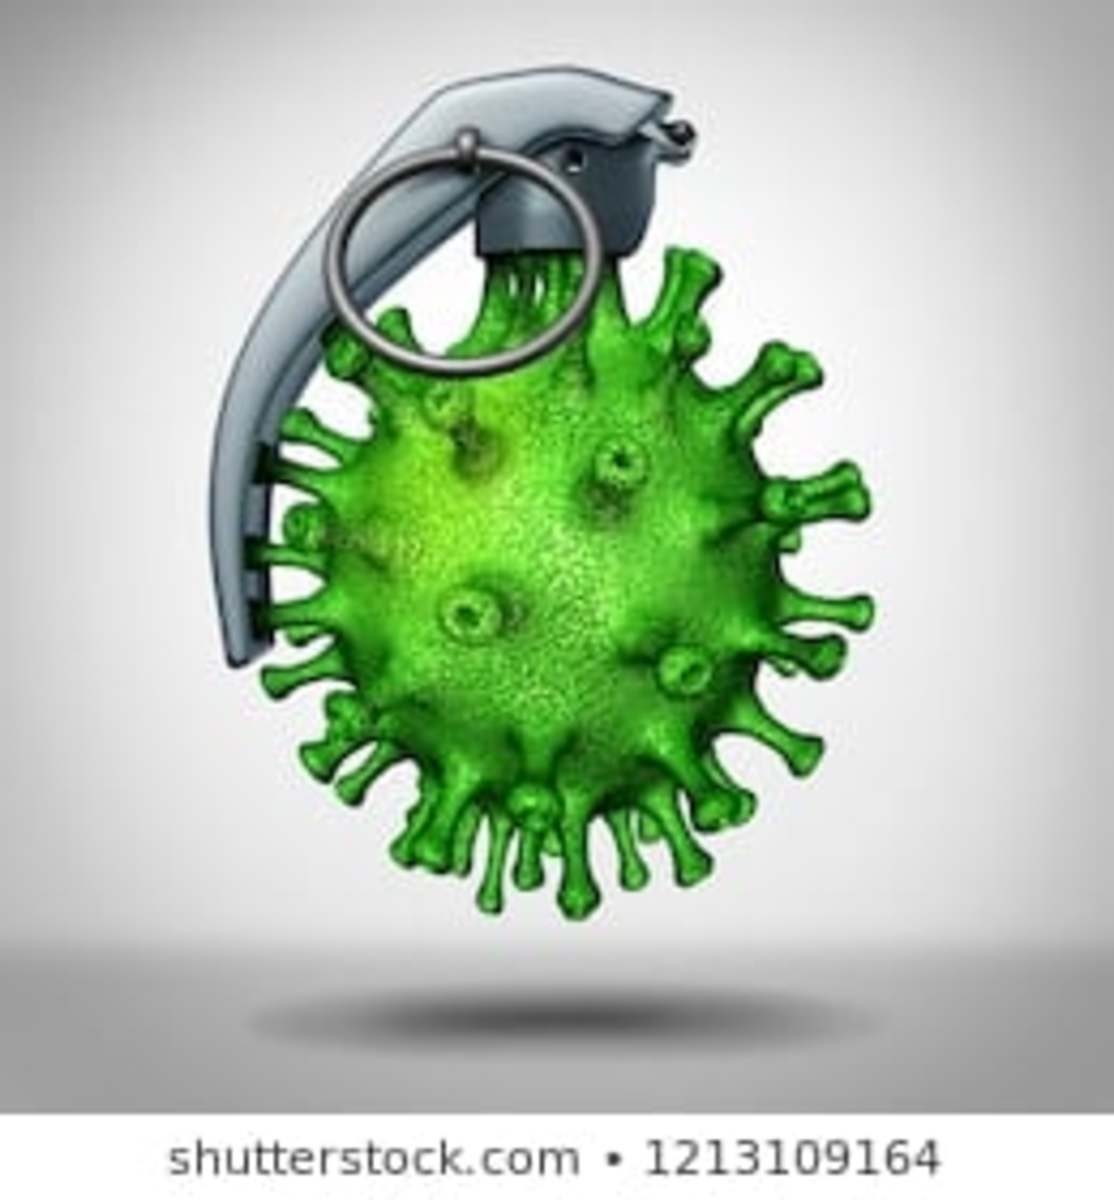 Germ Warfare and Bio Terrorism